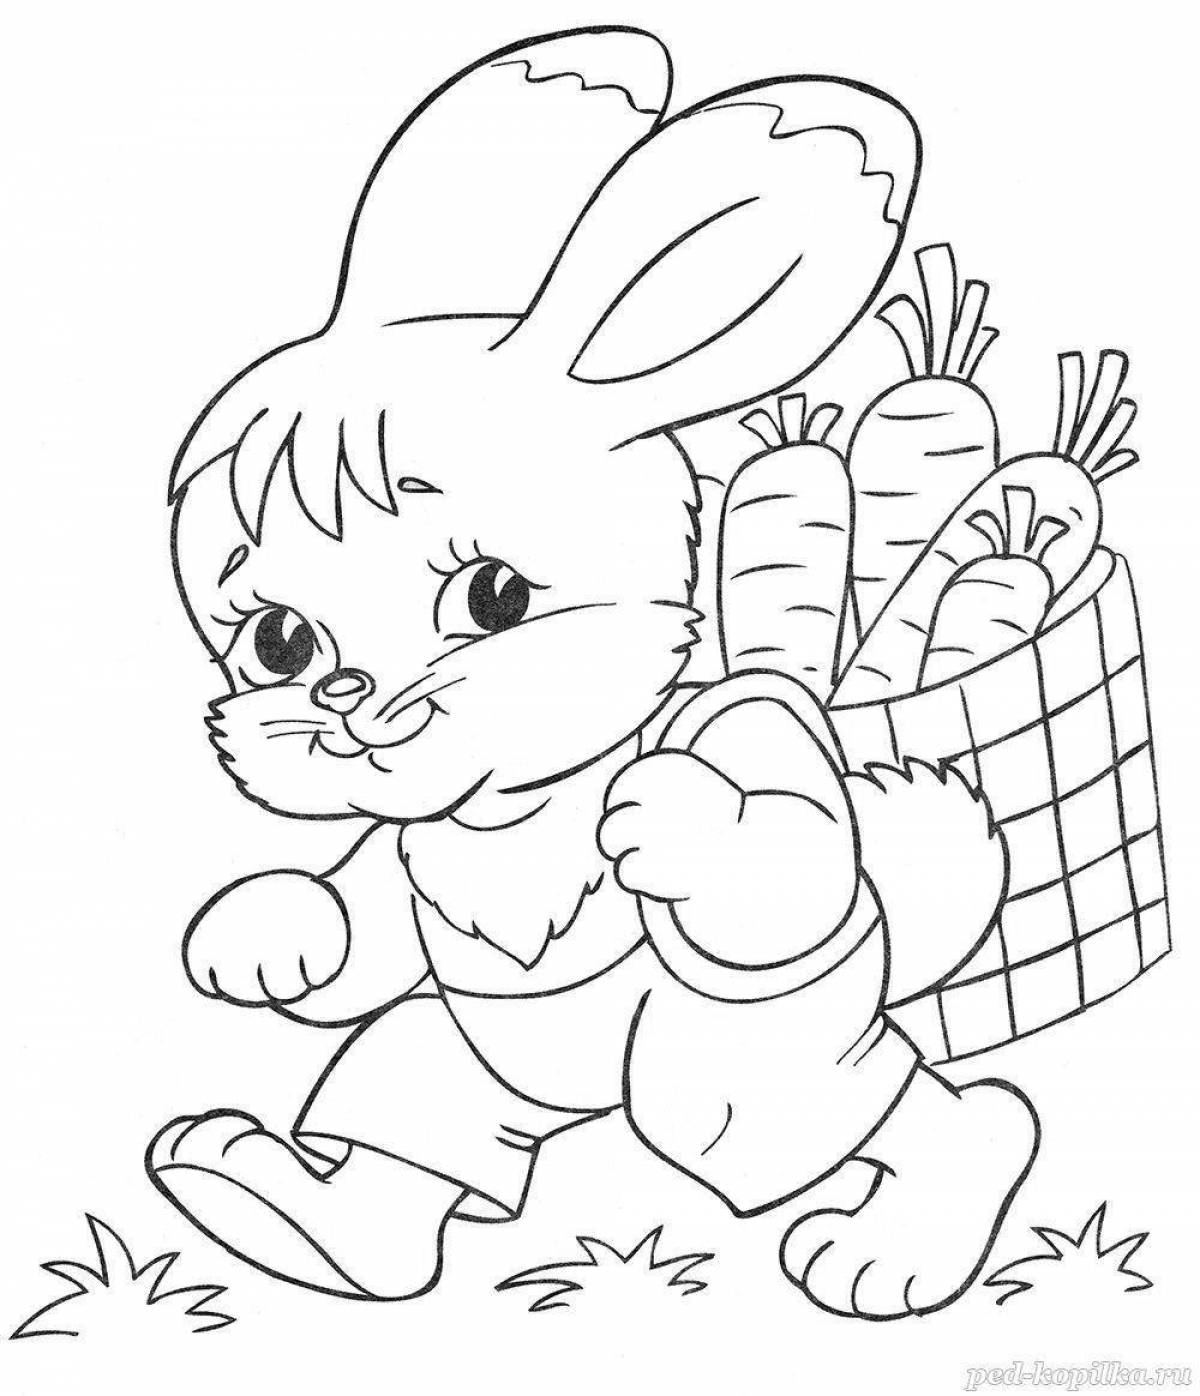 Jolly bunny coloring book